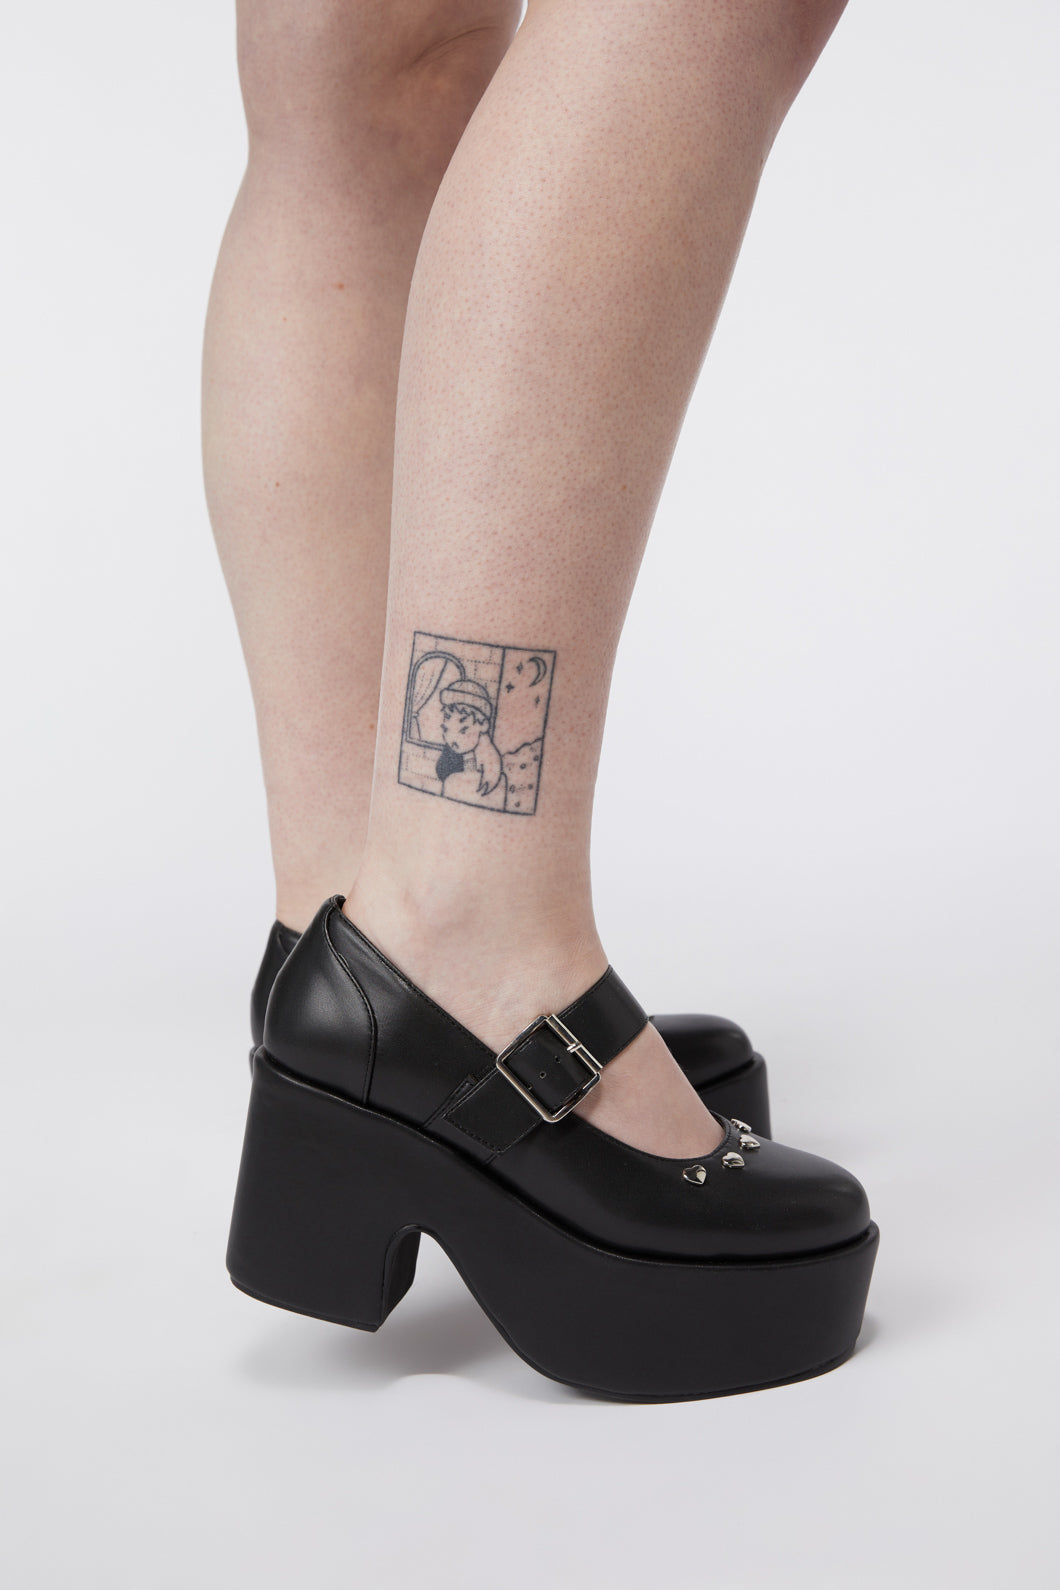 Hot Chocolate Design Tattoo Print Flat Shoes Mary Jane Size 11  eBay